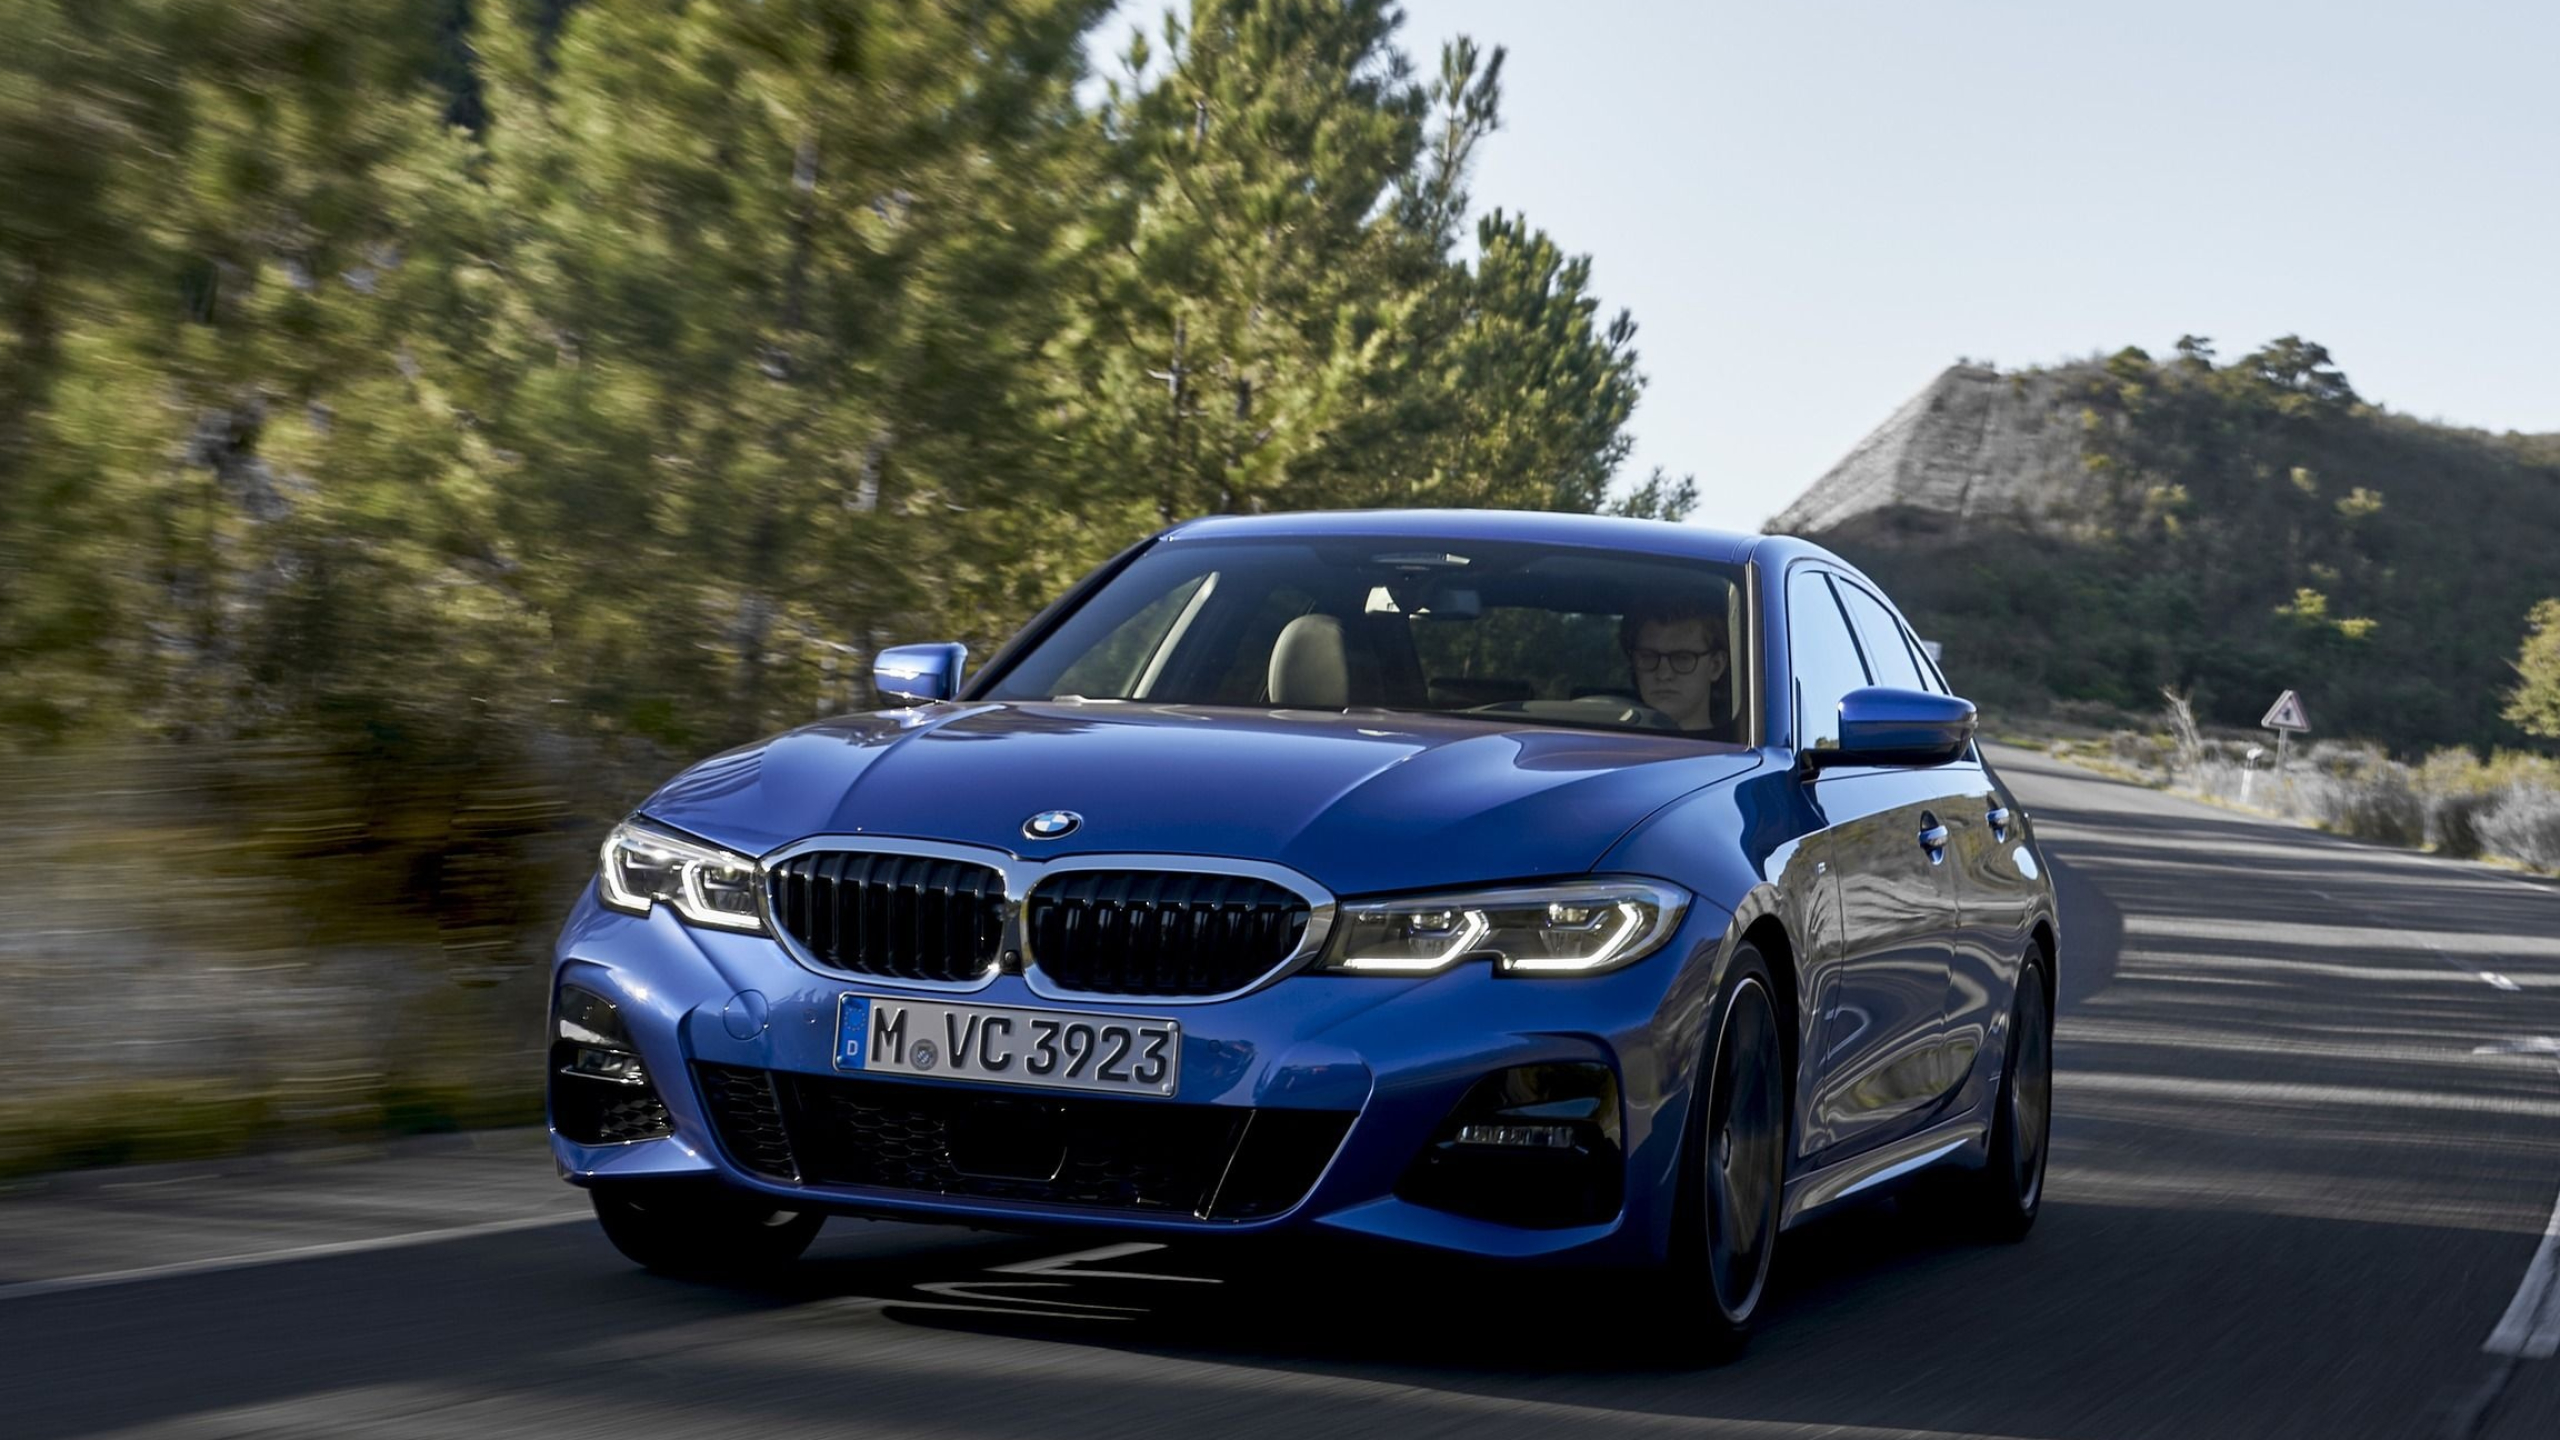 BMW 3 Series, Auto flair, 330i model, Supreme performance, 2560x1440 HD Desktop